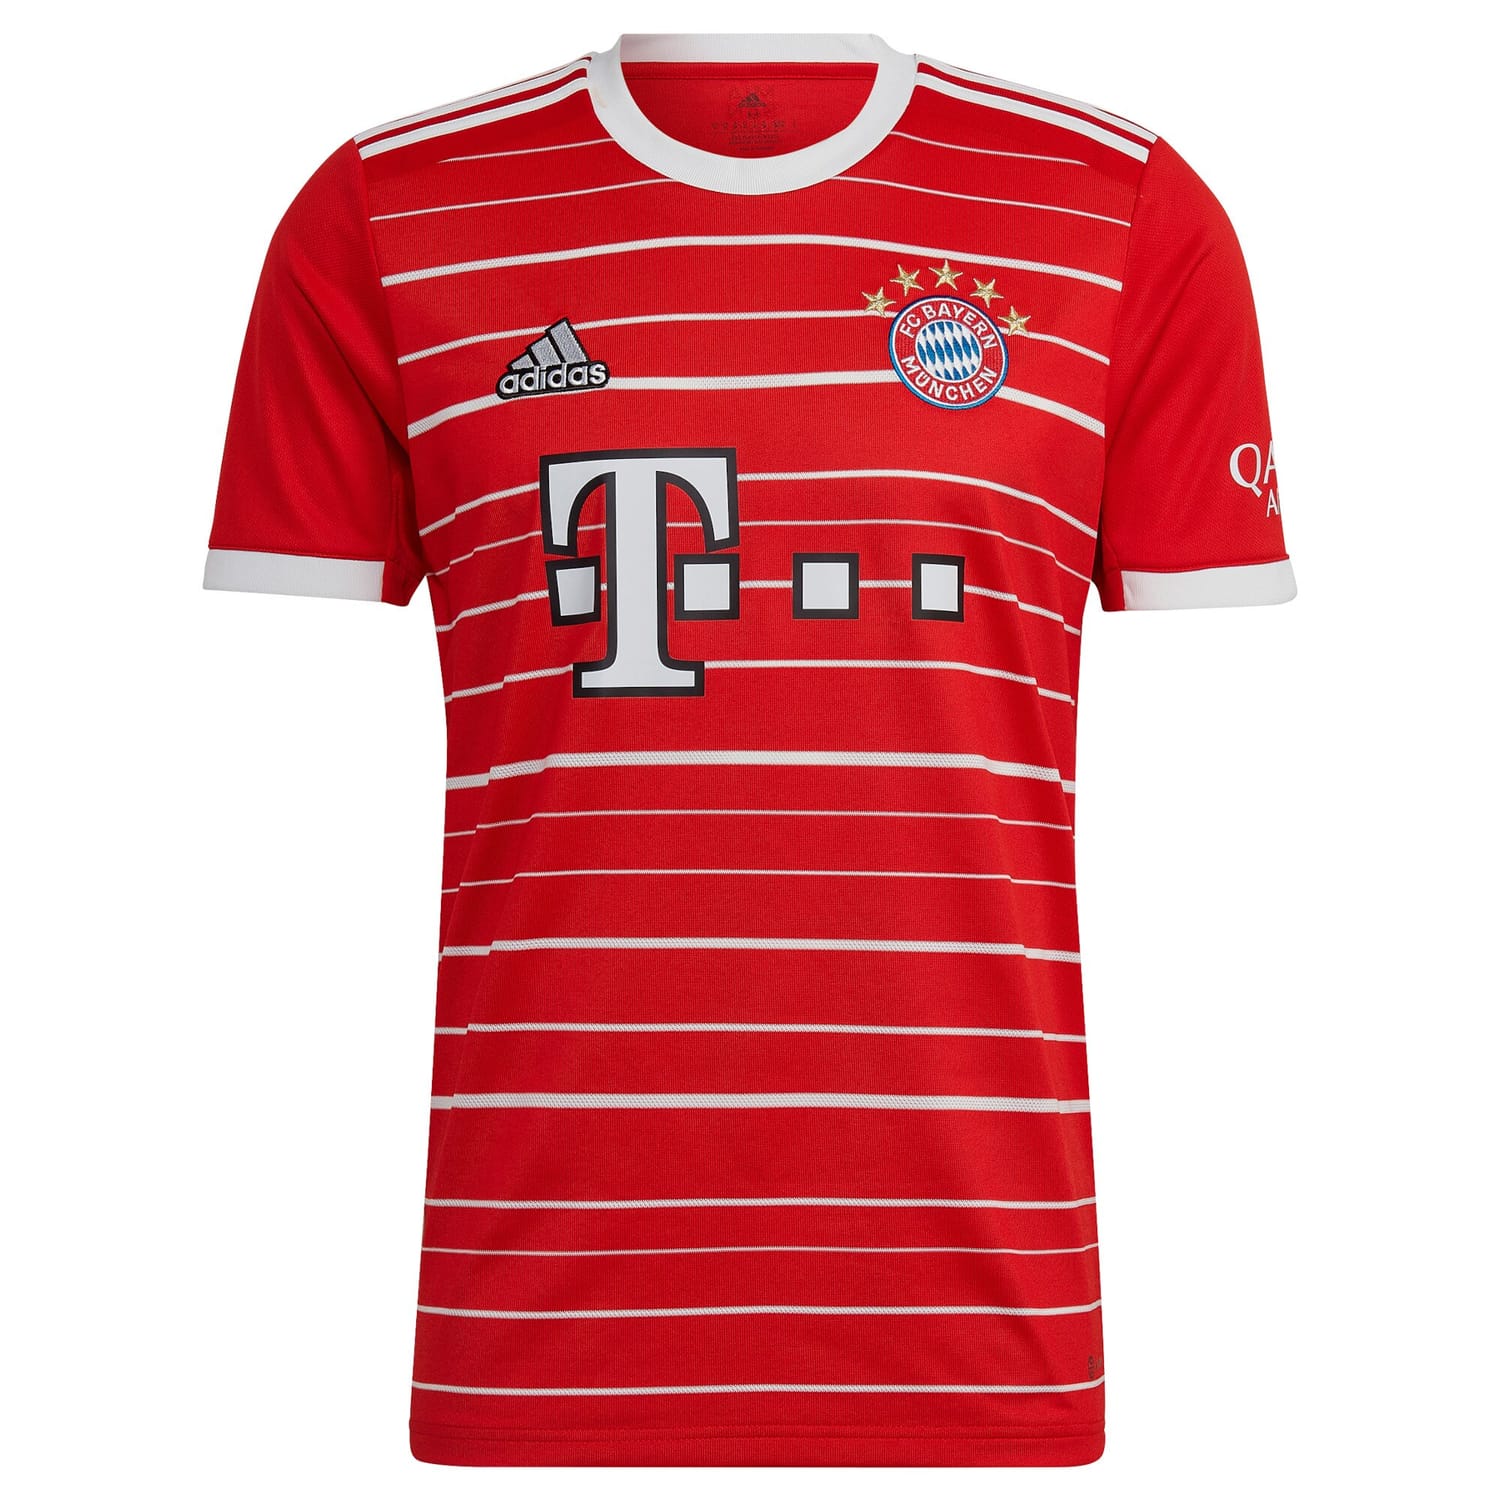 Bundesliga Bayern Munich Home Jersey Shirt 2022-23 player Kimmich 6 printing for Men